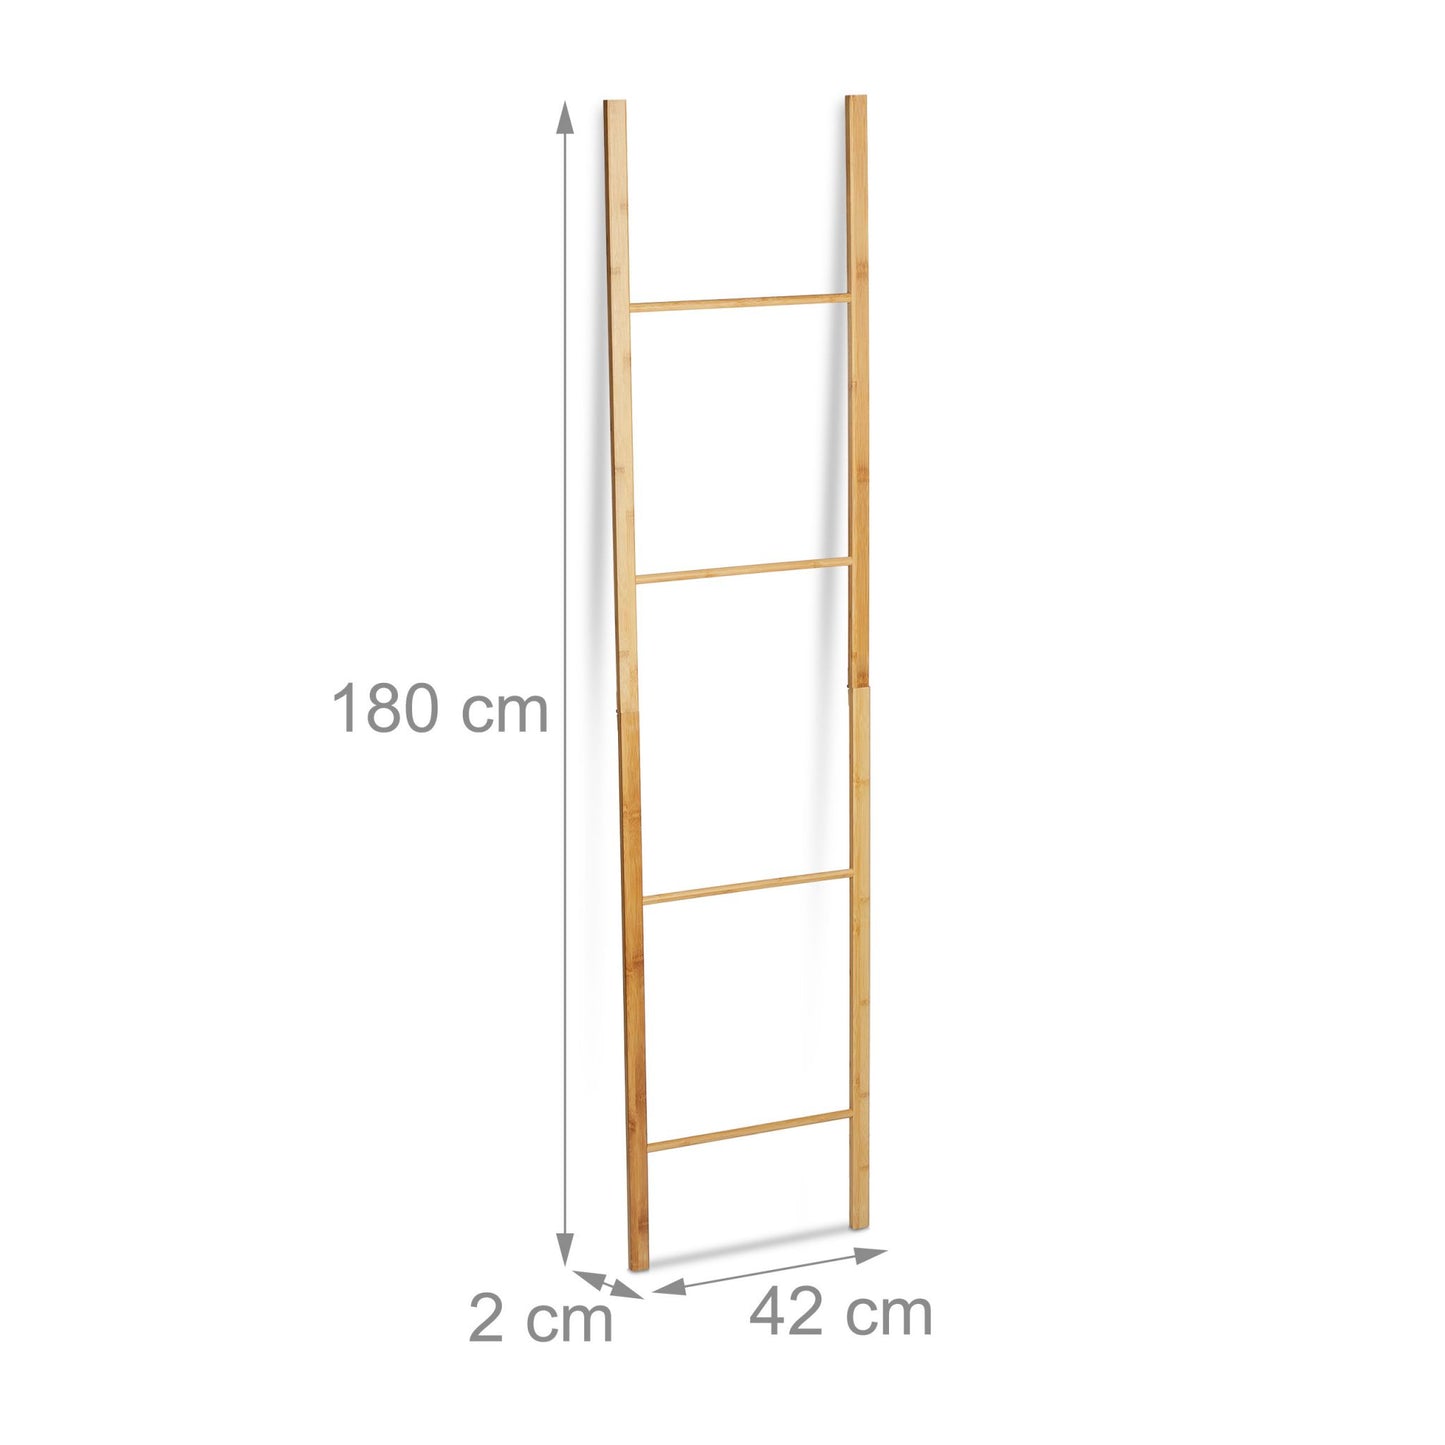 RelaxDays Folding Bamboo Towel Ladder Rack Bamboo Bathrooms